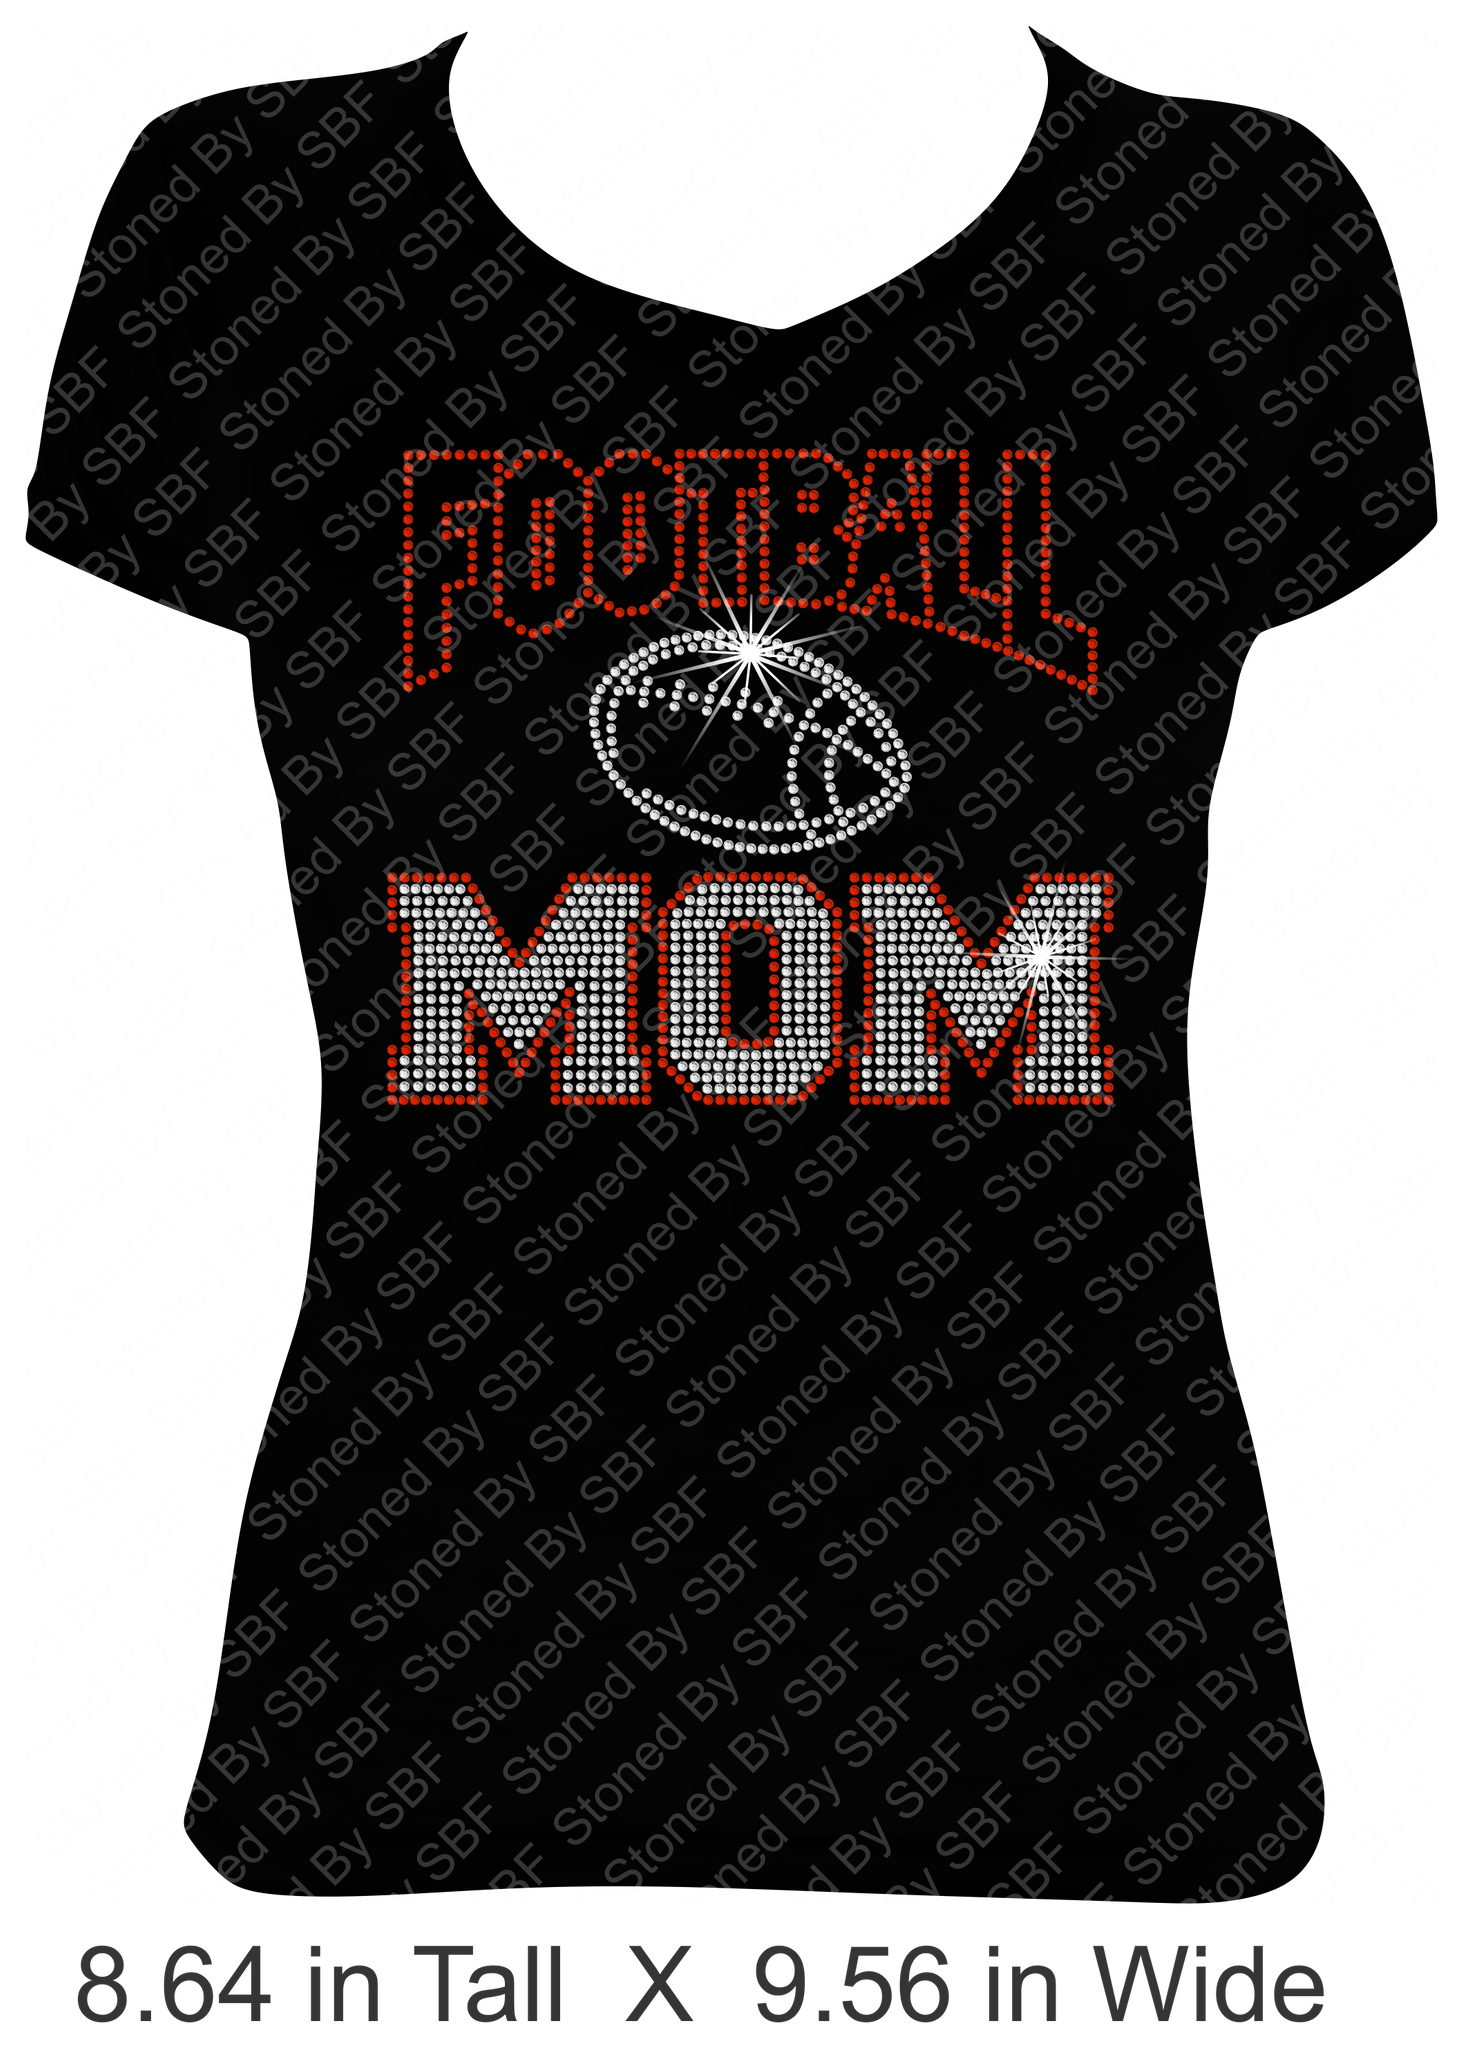 Football Mom (Crystal Football)